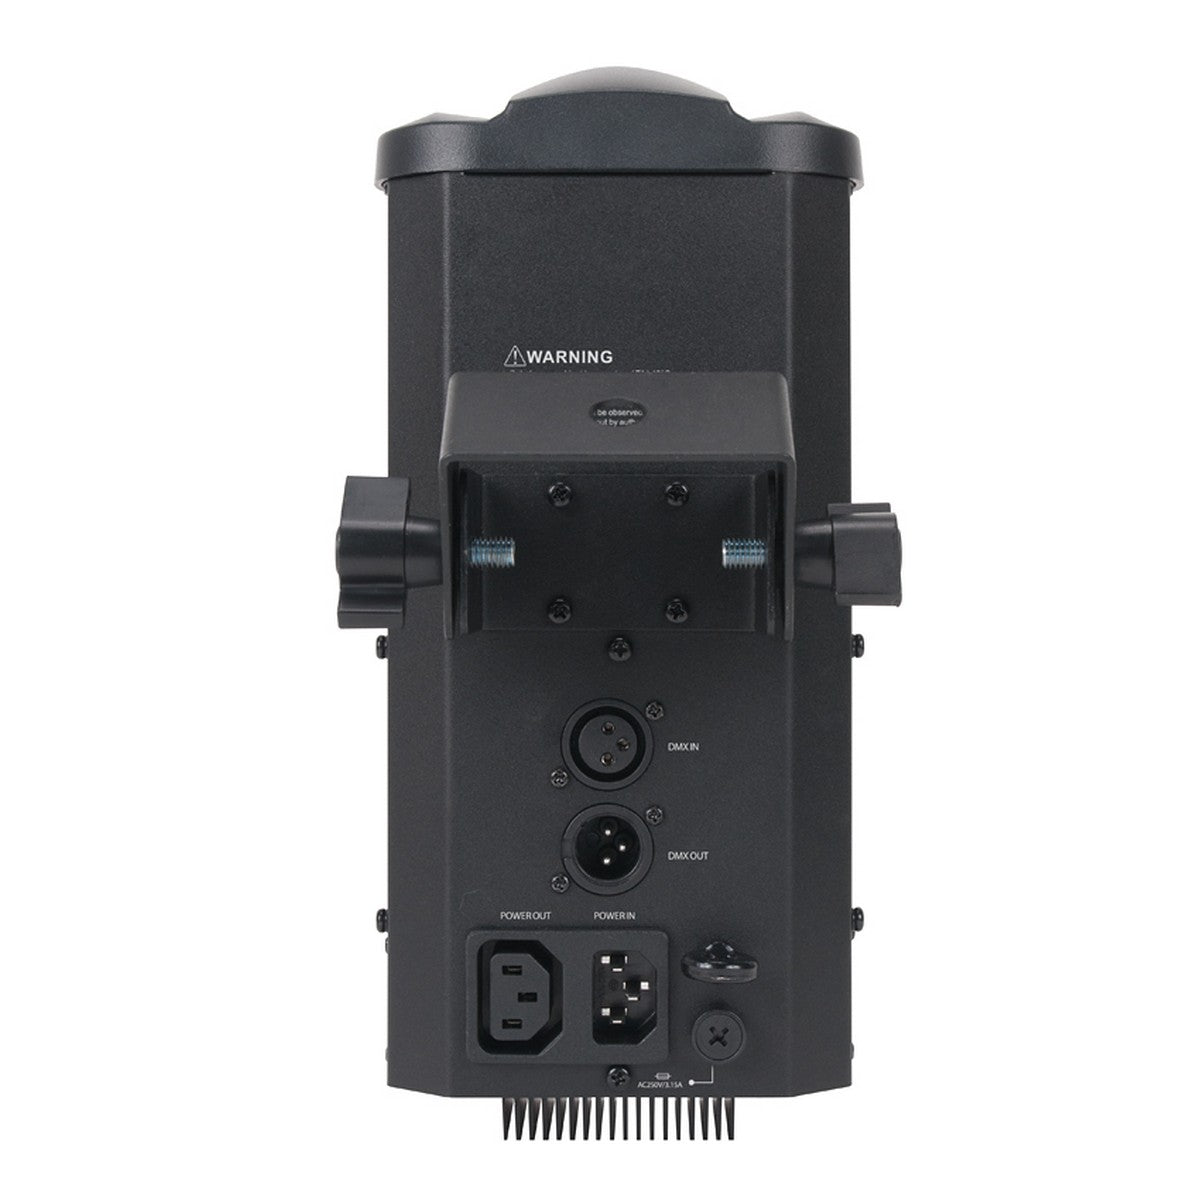 ADJ Inno Pocket Roll | Compact High Powered 12Watt LED Barreled Mirrored Scanner